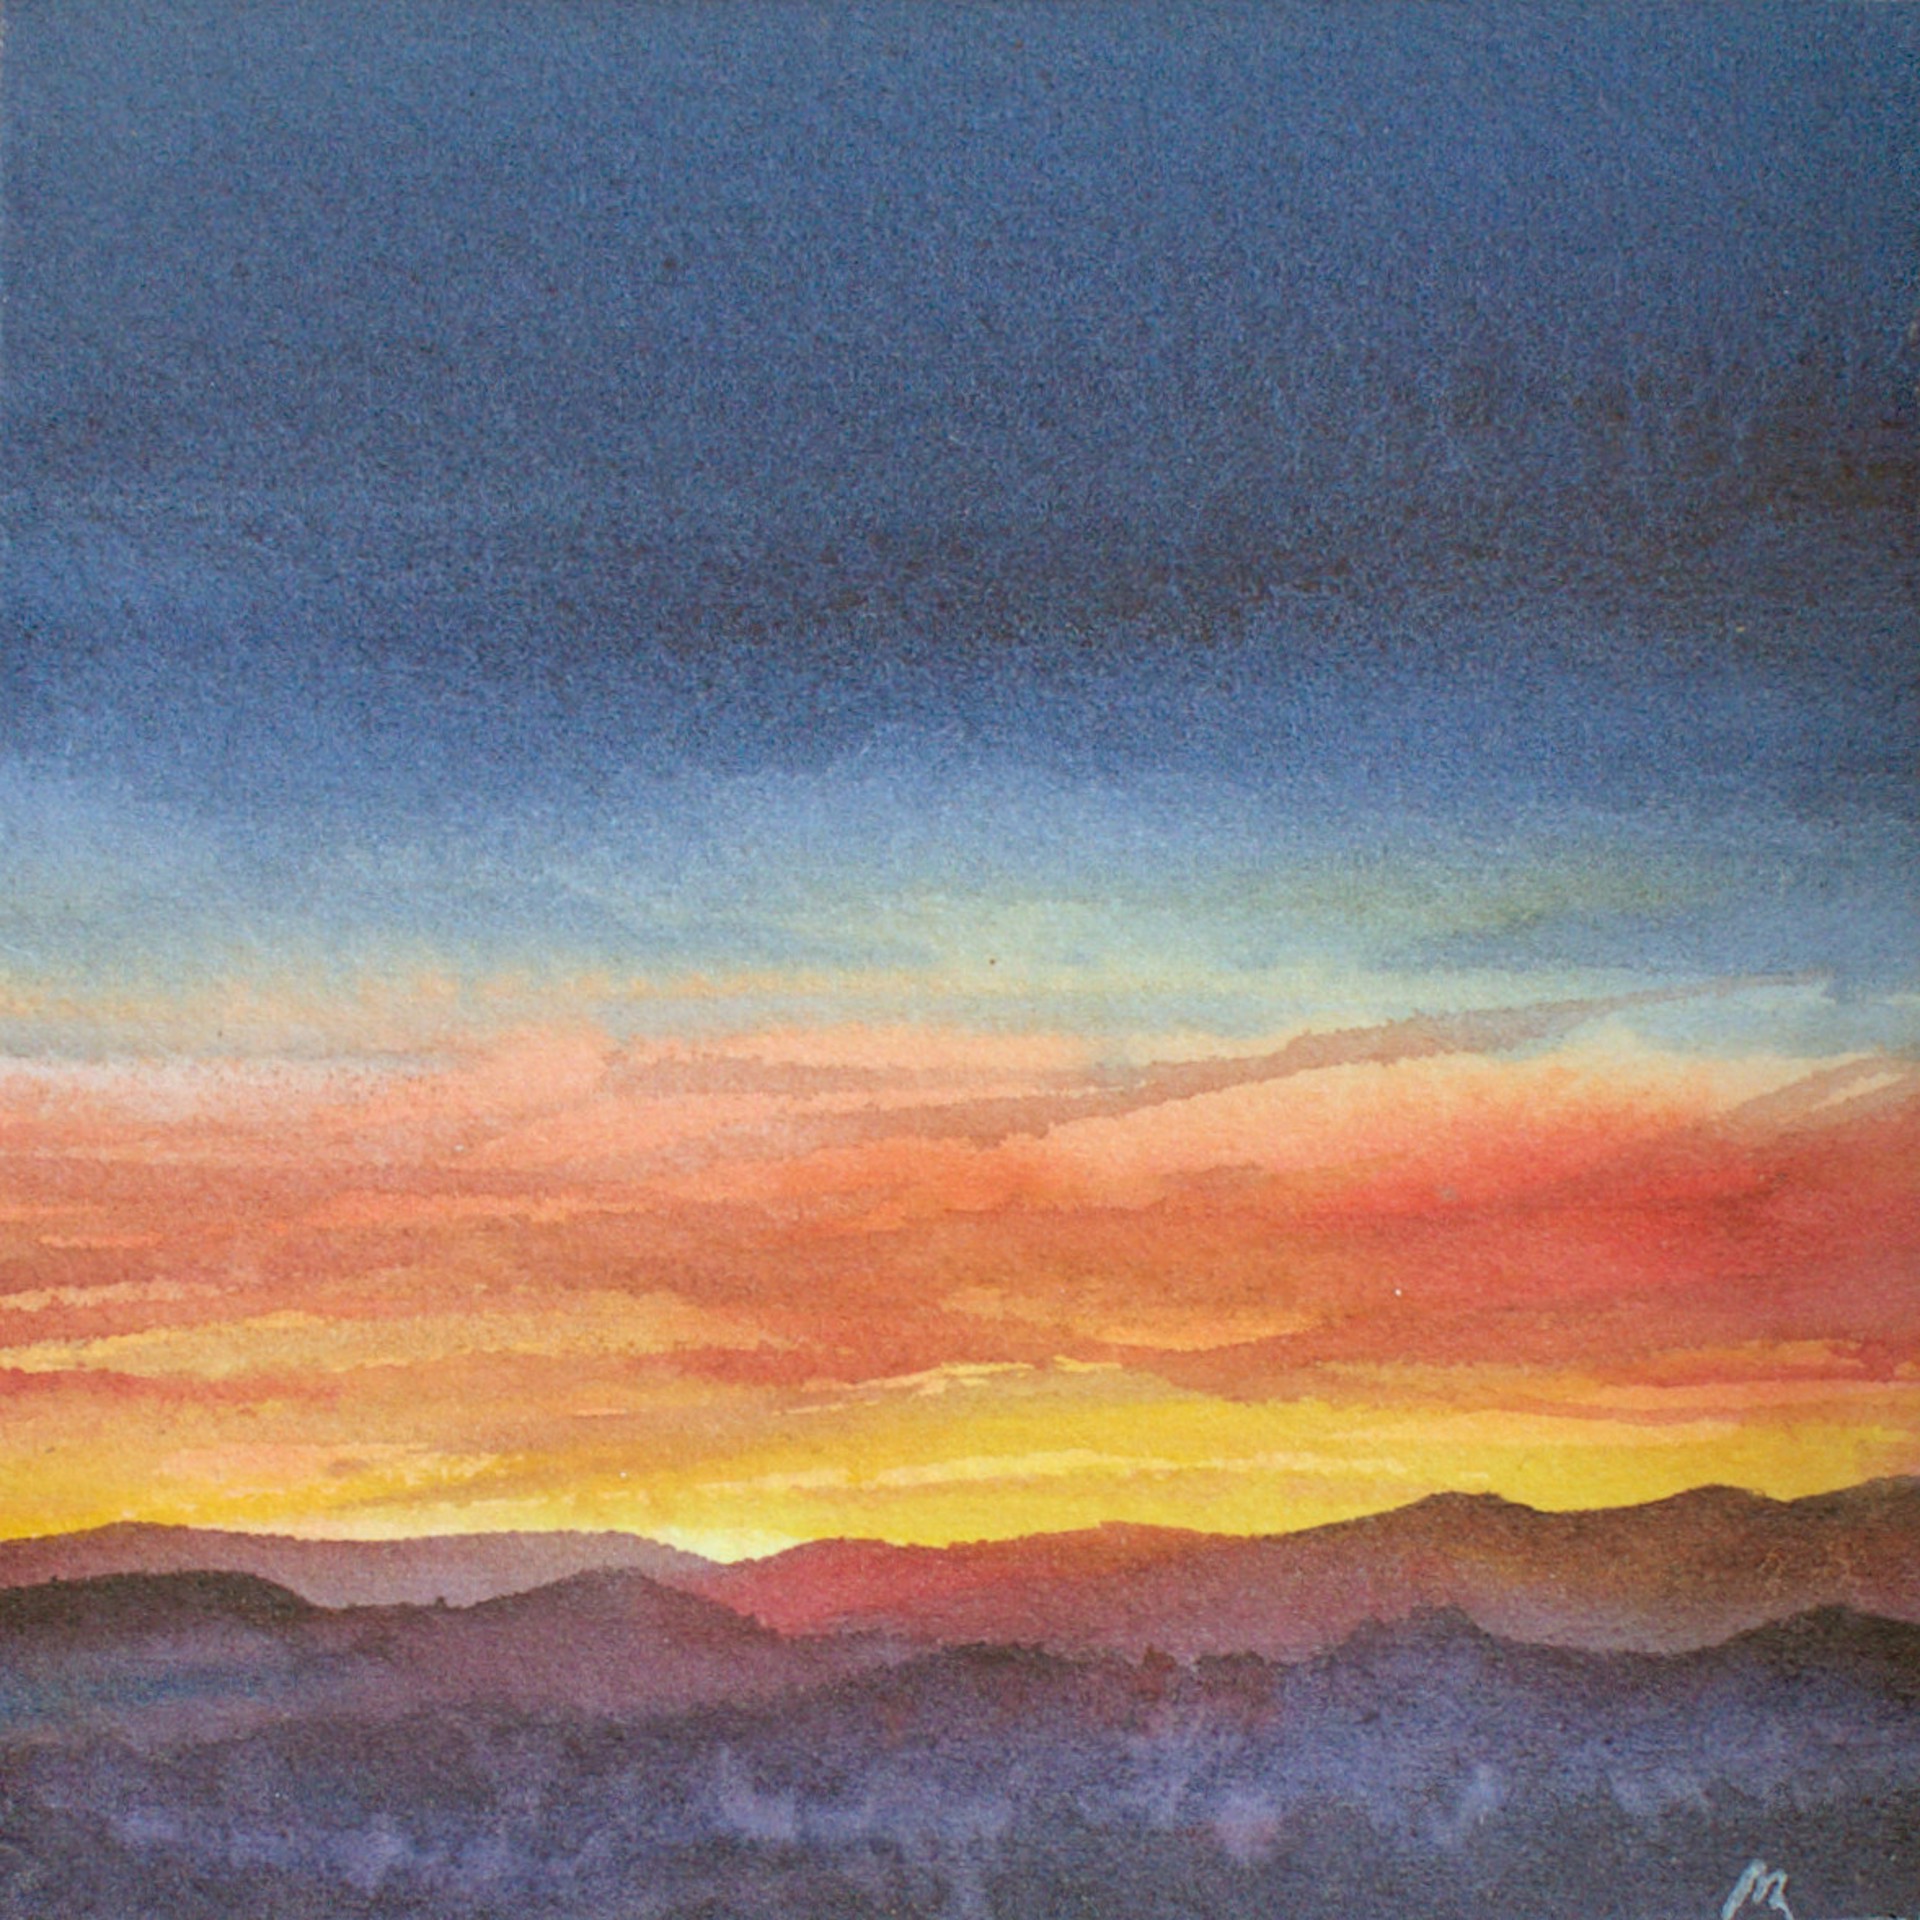 Sunrise # 2 by Bronwen McCormick